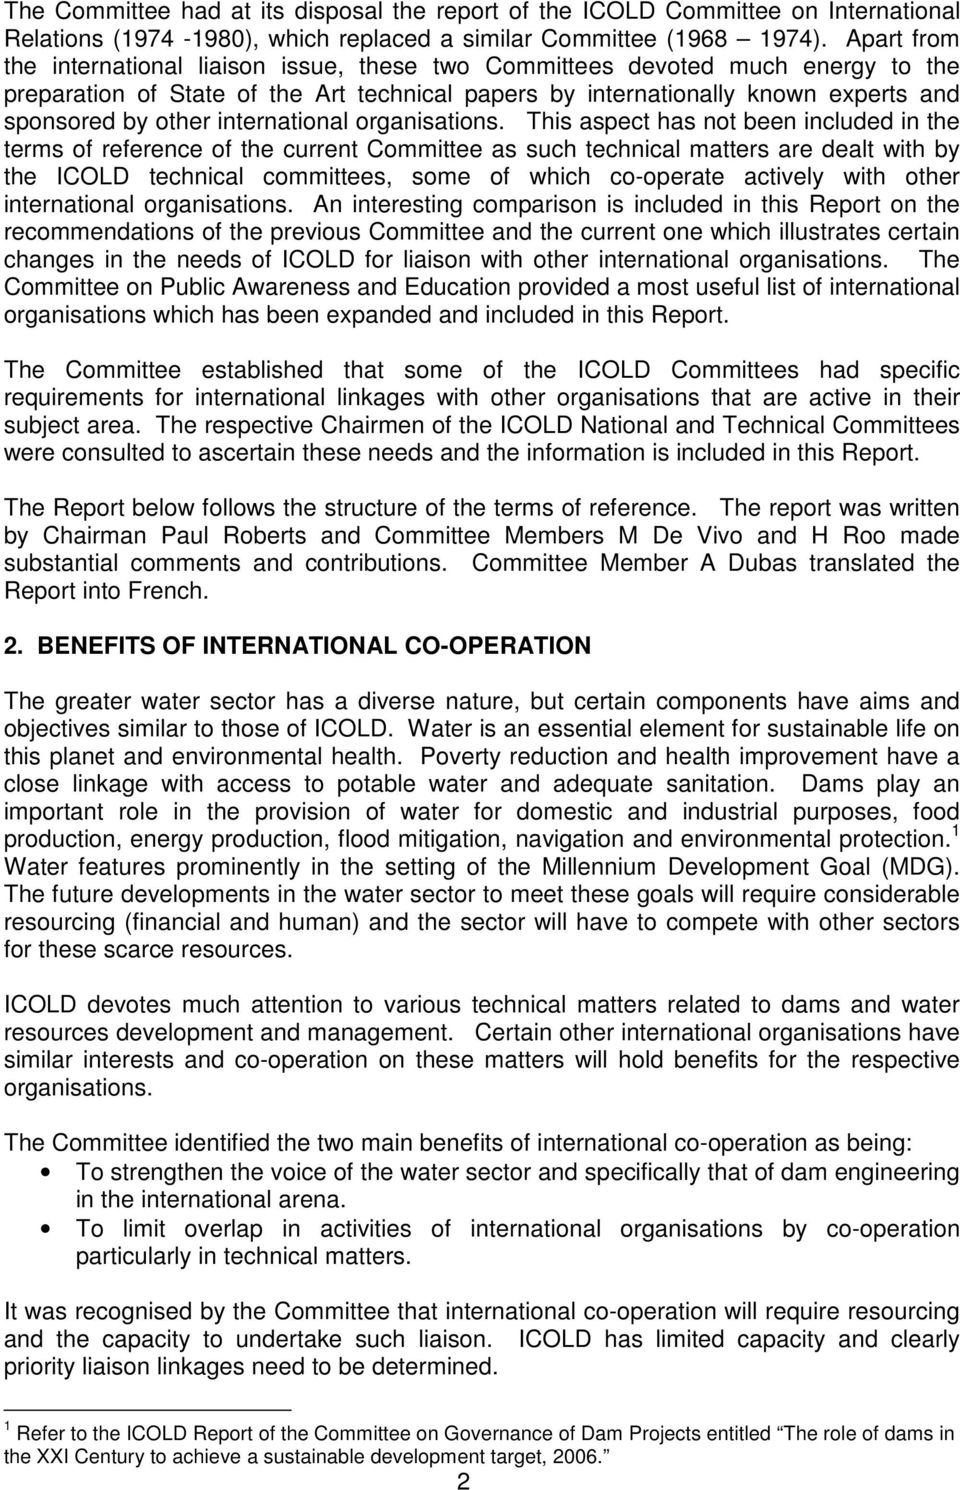 international organisations.